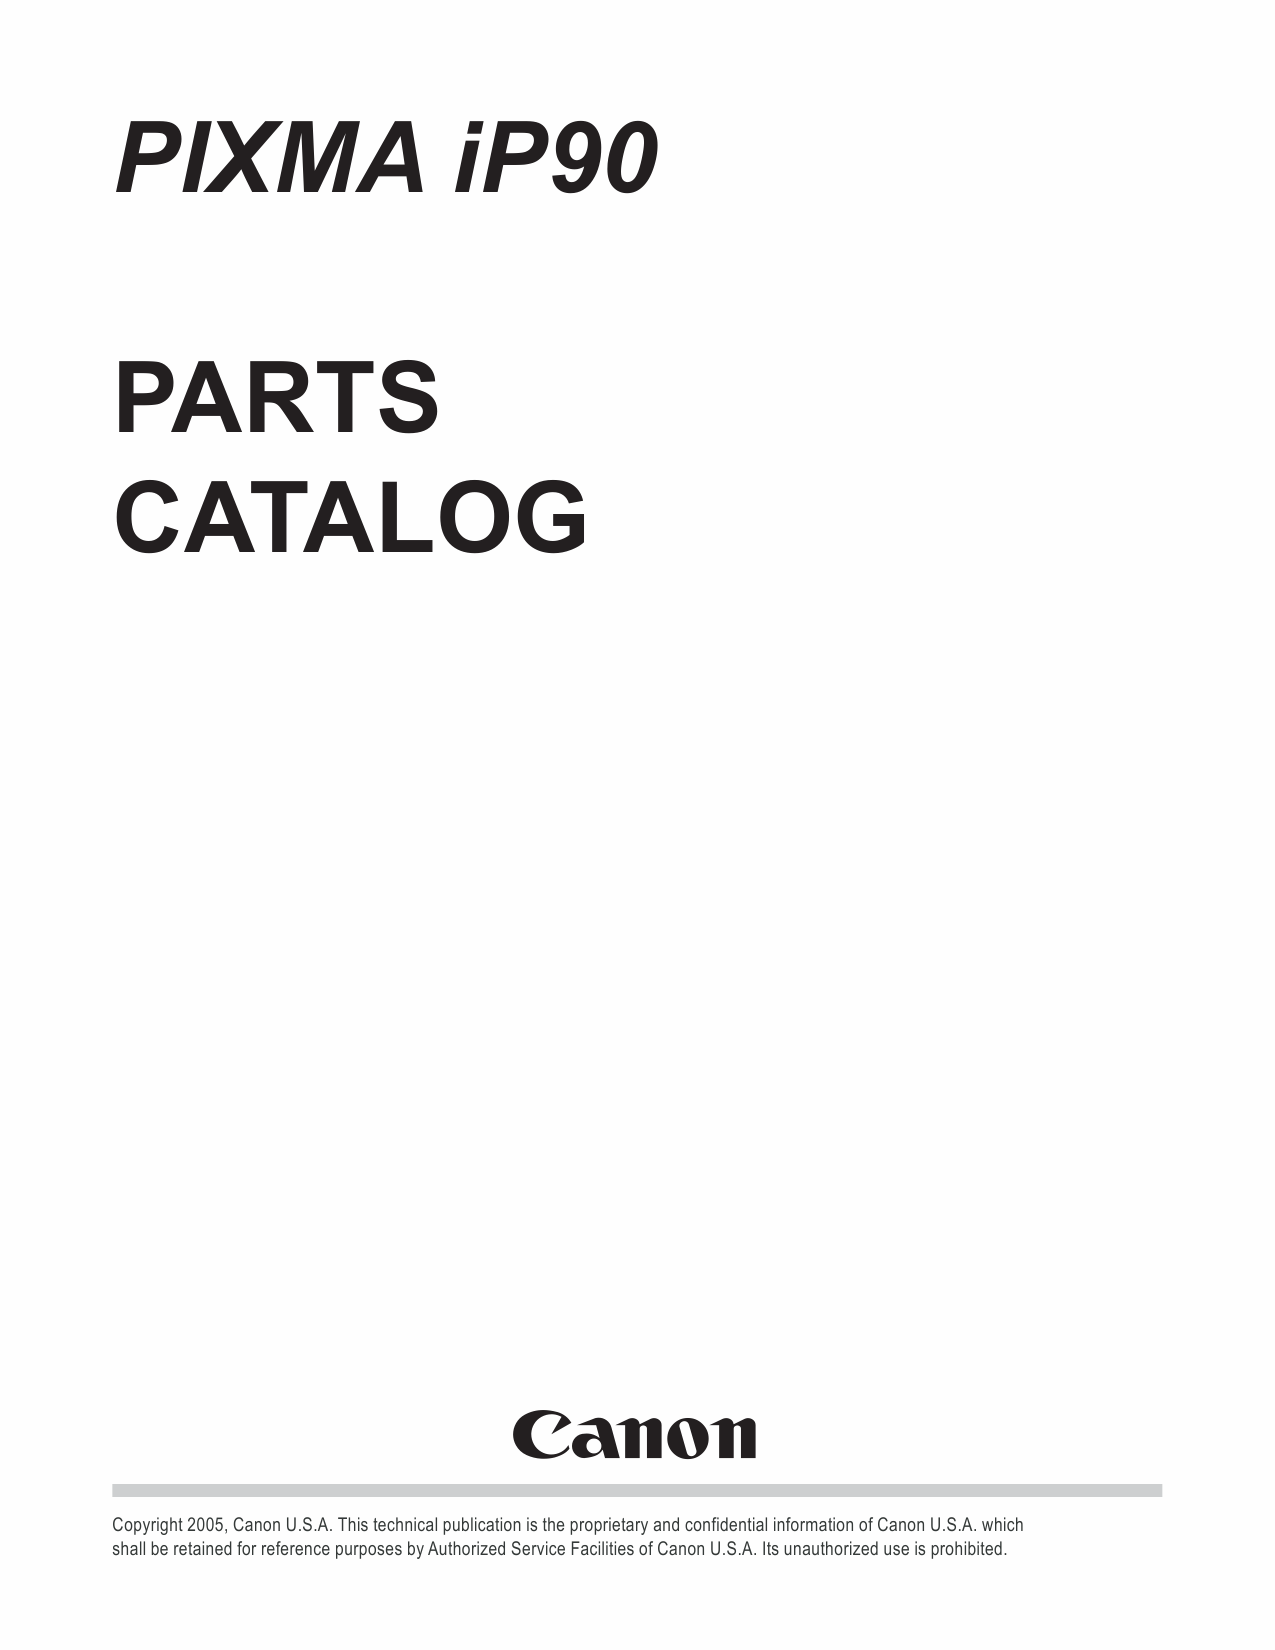 Canon PIXMA iP90 Parts Catalog-1